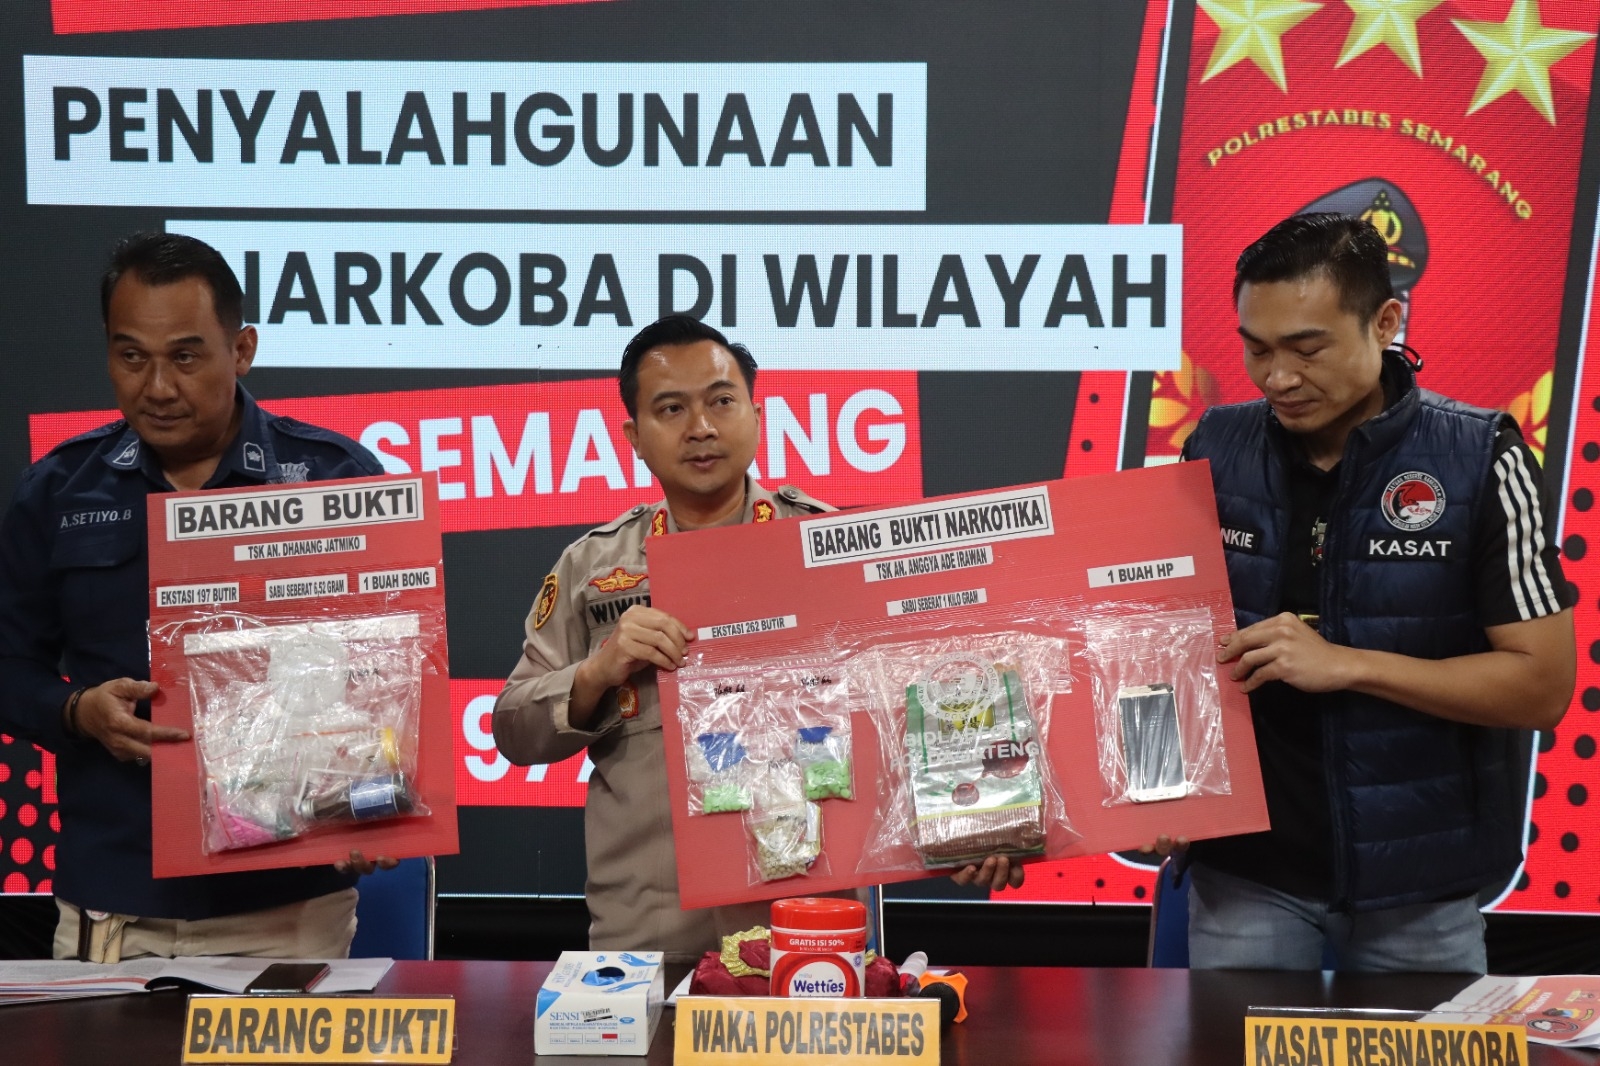 Pengedar Narkoba Jaringan Fredy Pratama Ditangkap di Semarang, Bawa 1 Kg Sabu dan Ratusan Ekstasi